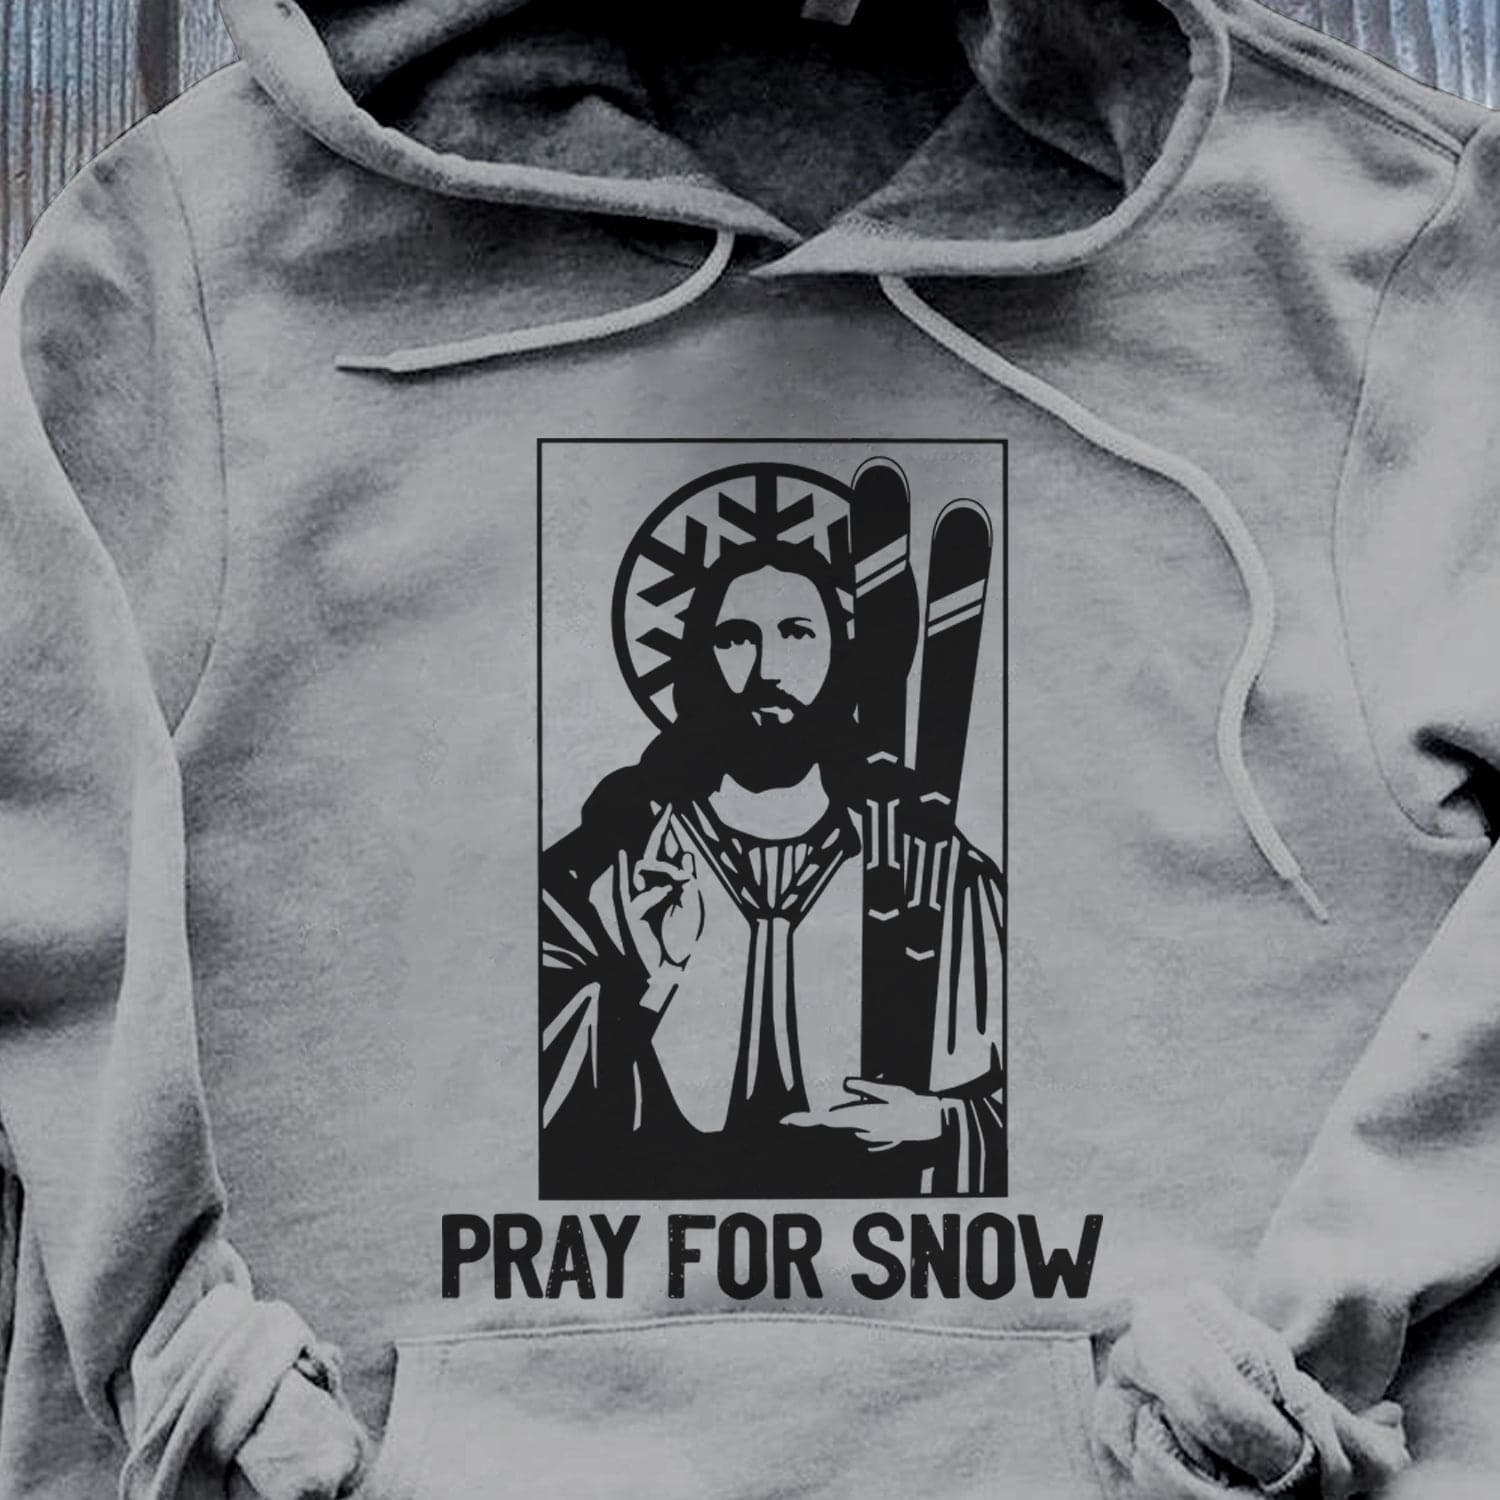 Pray for snow - Christmas day gift, Jesus go skiing